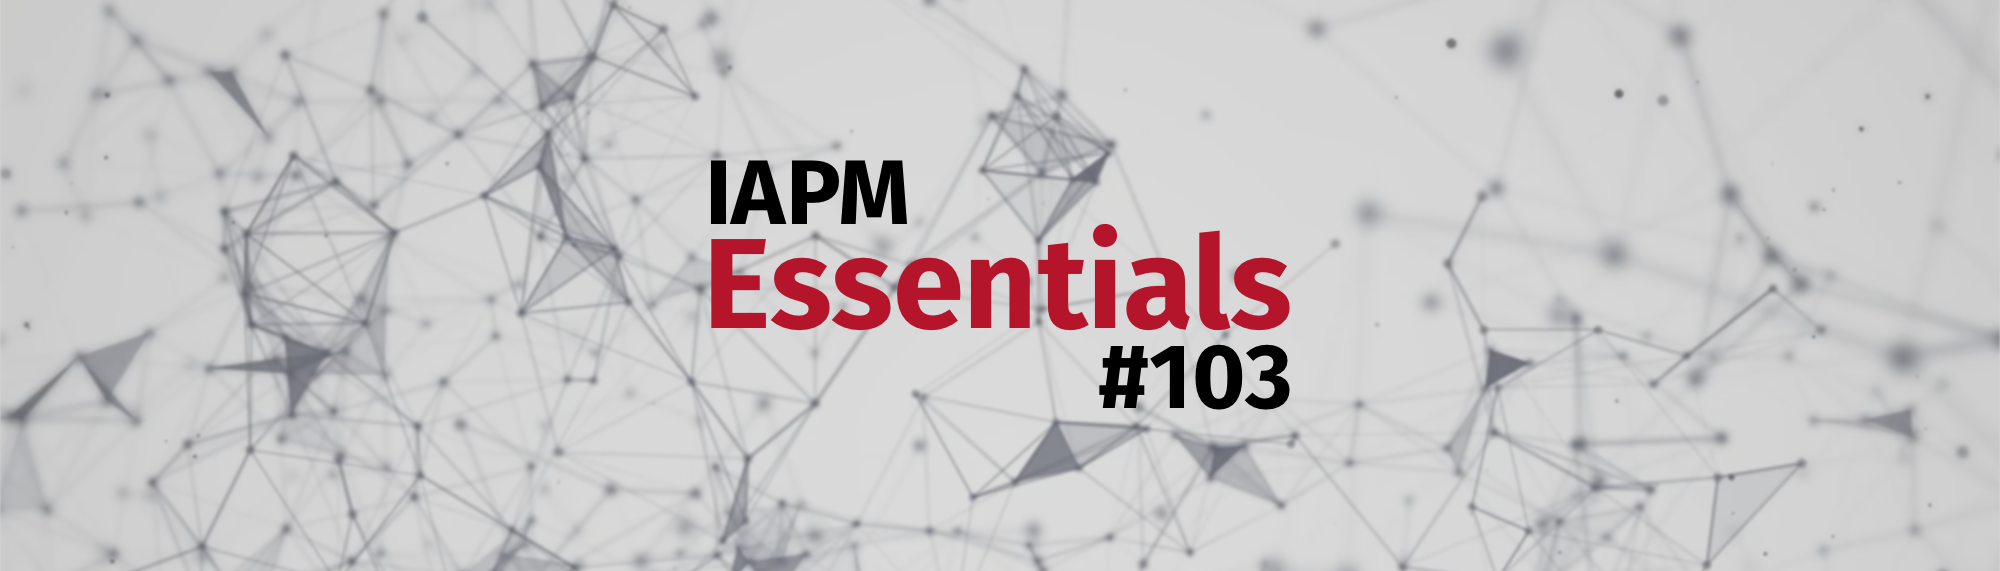 IAPM Essentials #103 - PM Neuigkeiten | IAPM